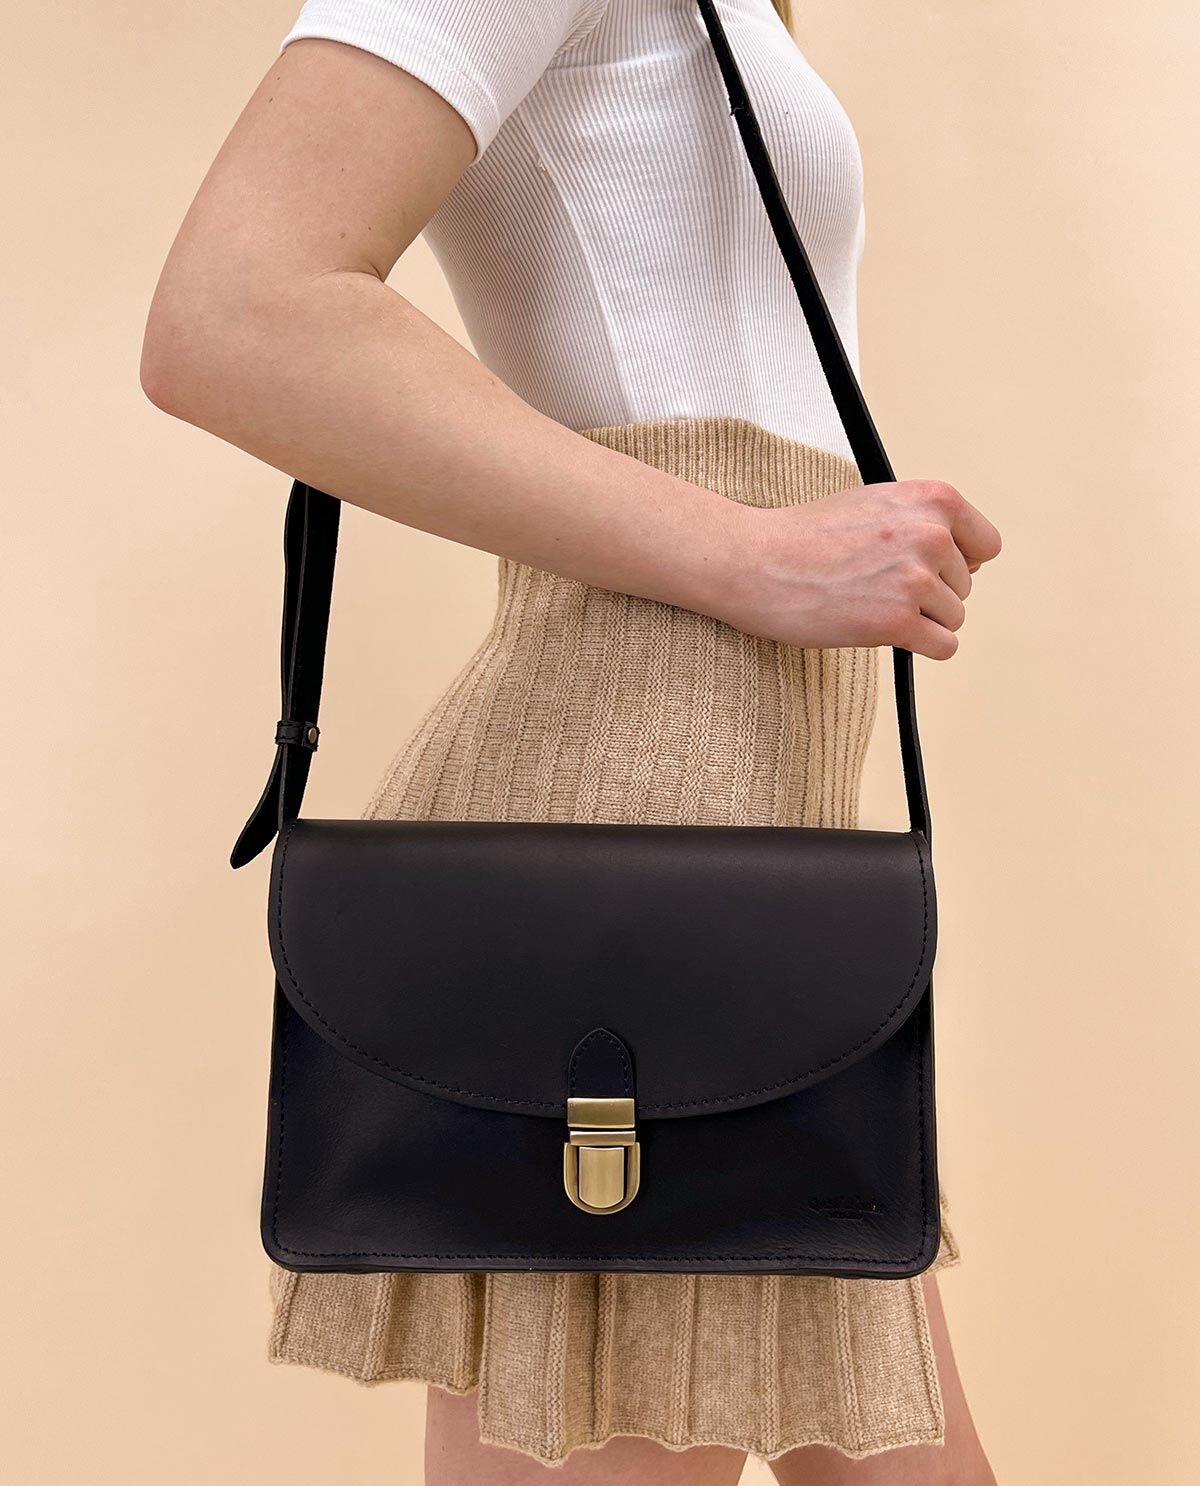 Leather Bag the Who Bag Unique Mod Black Leather Bag Women 